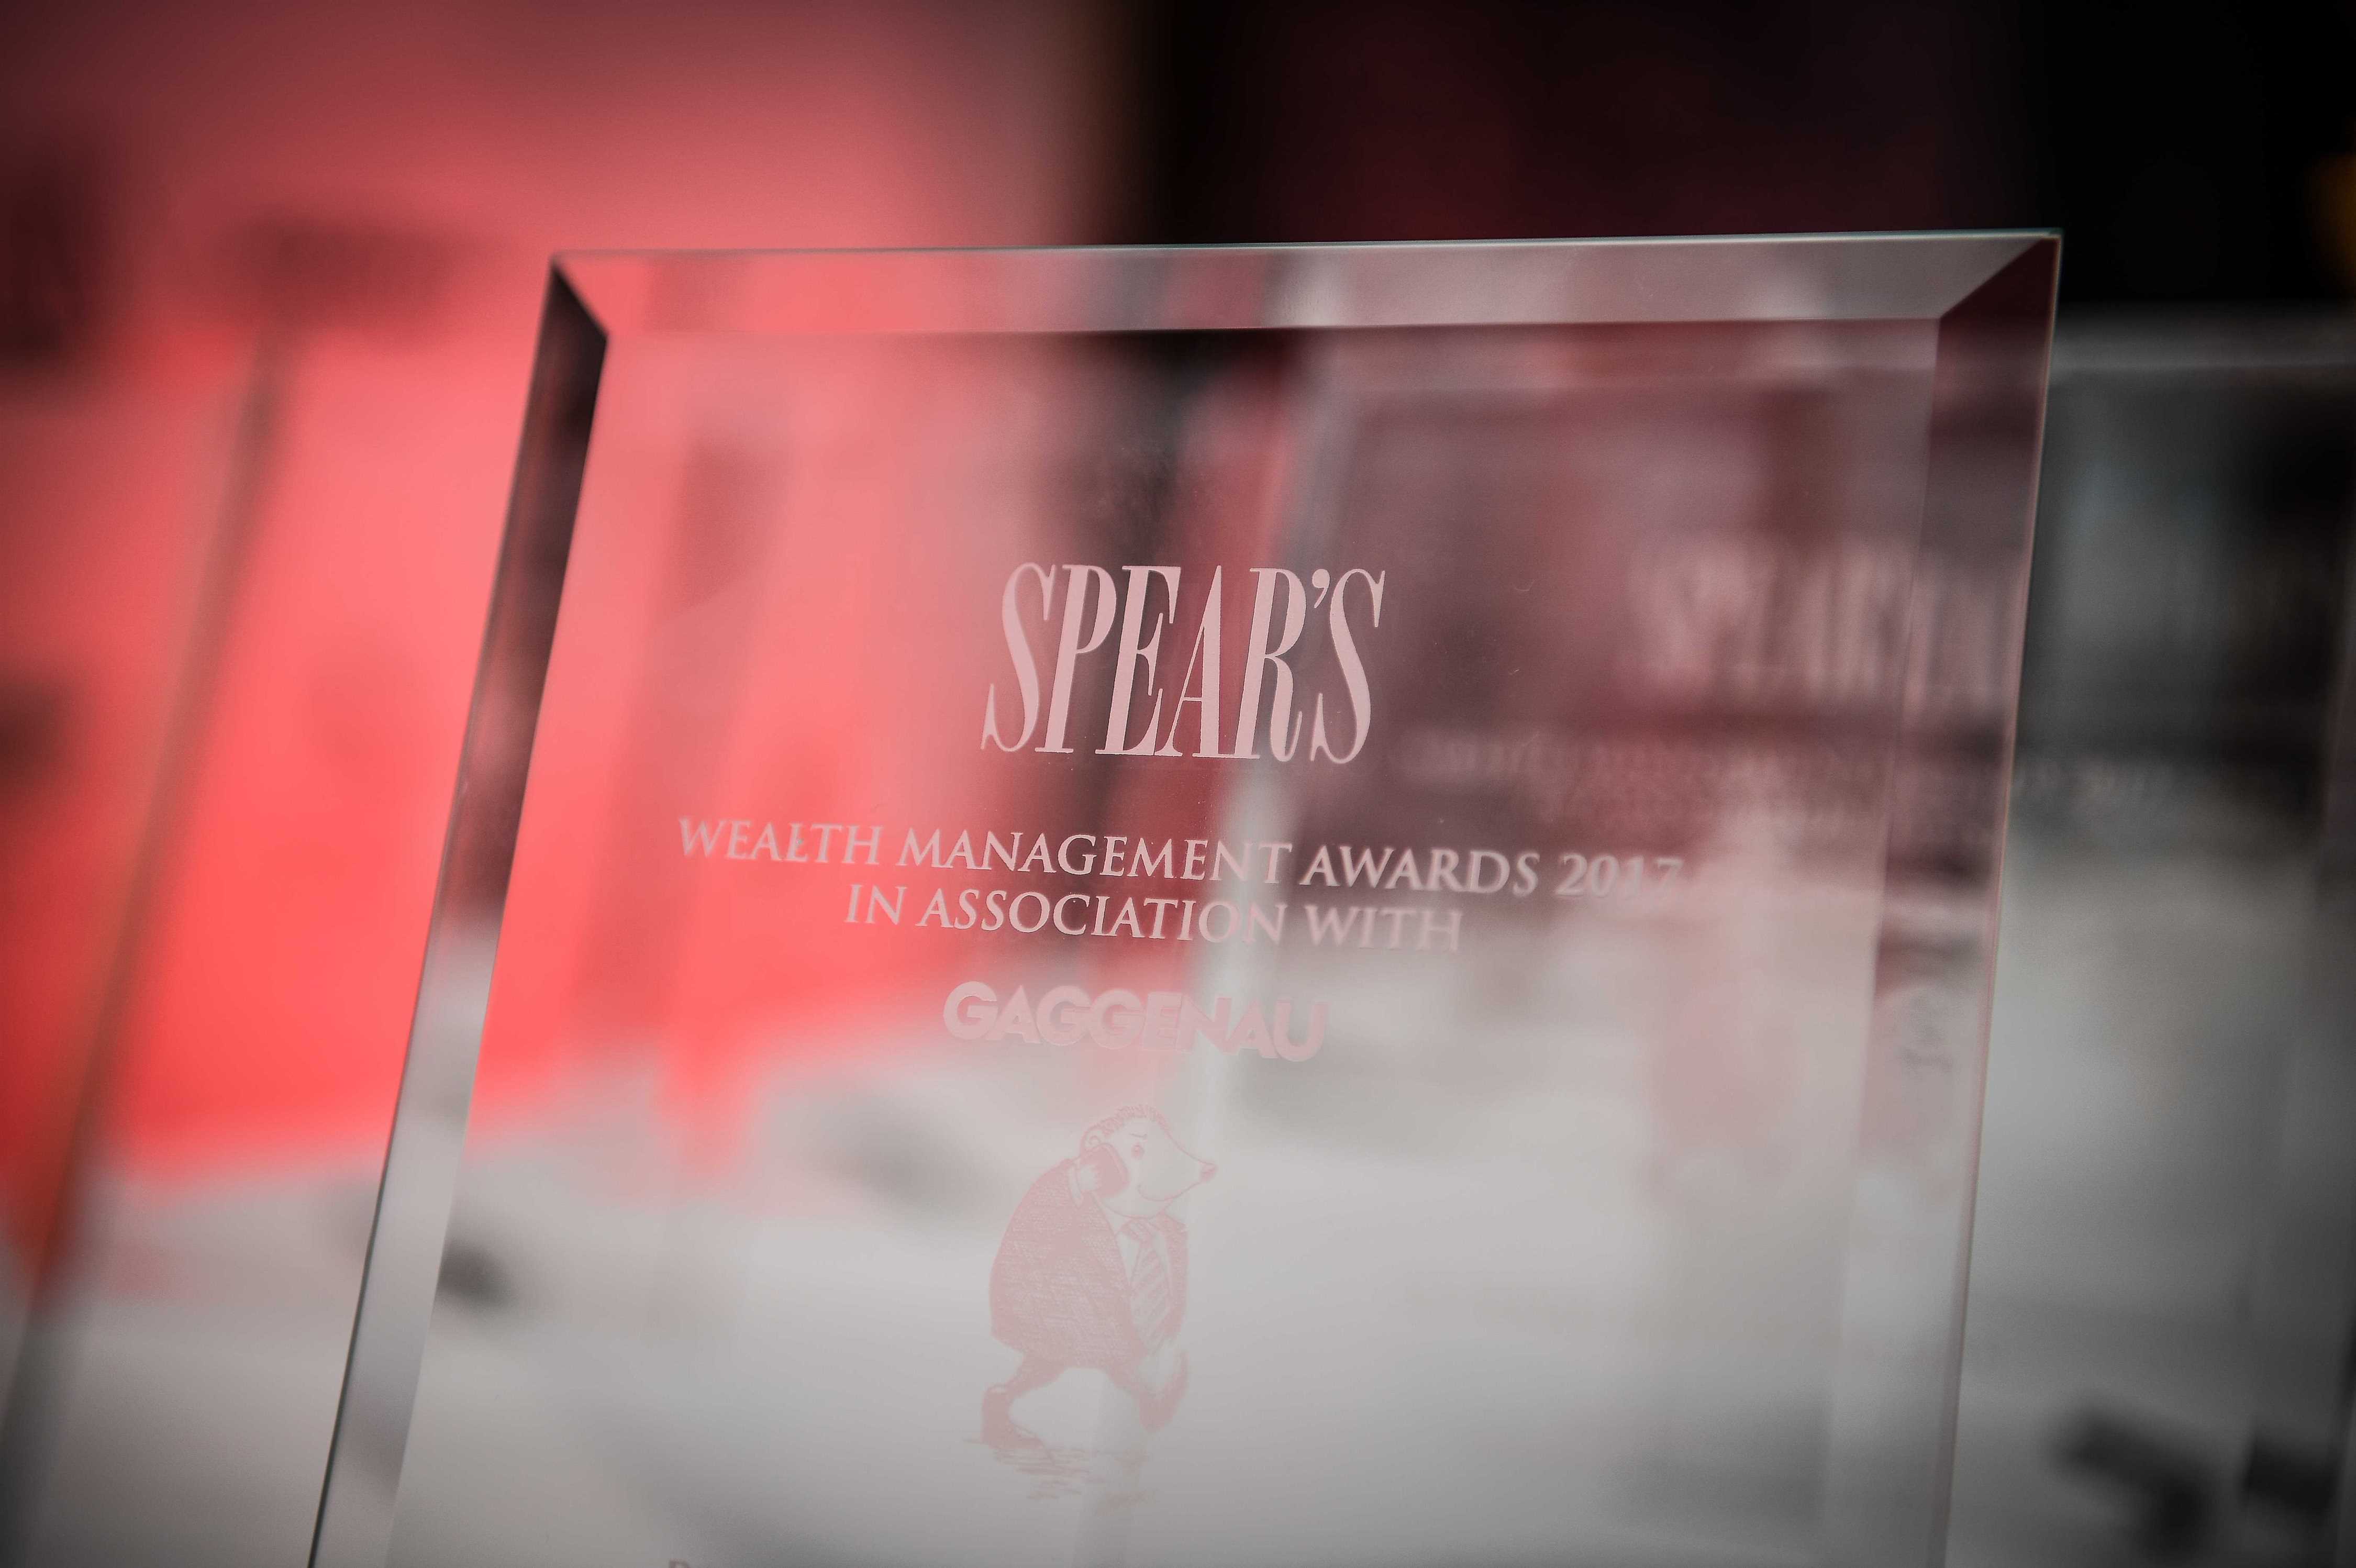 Spear’s Wealth Management Awards award